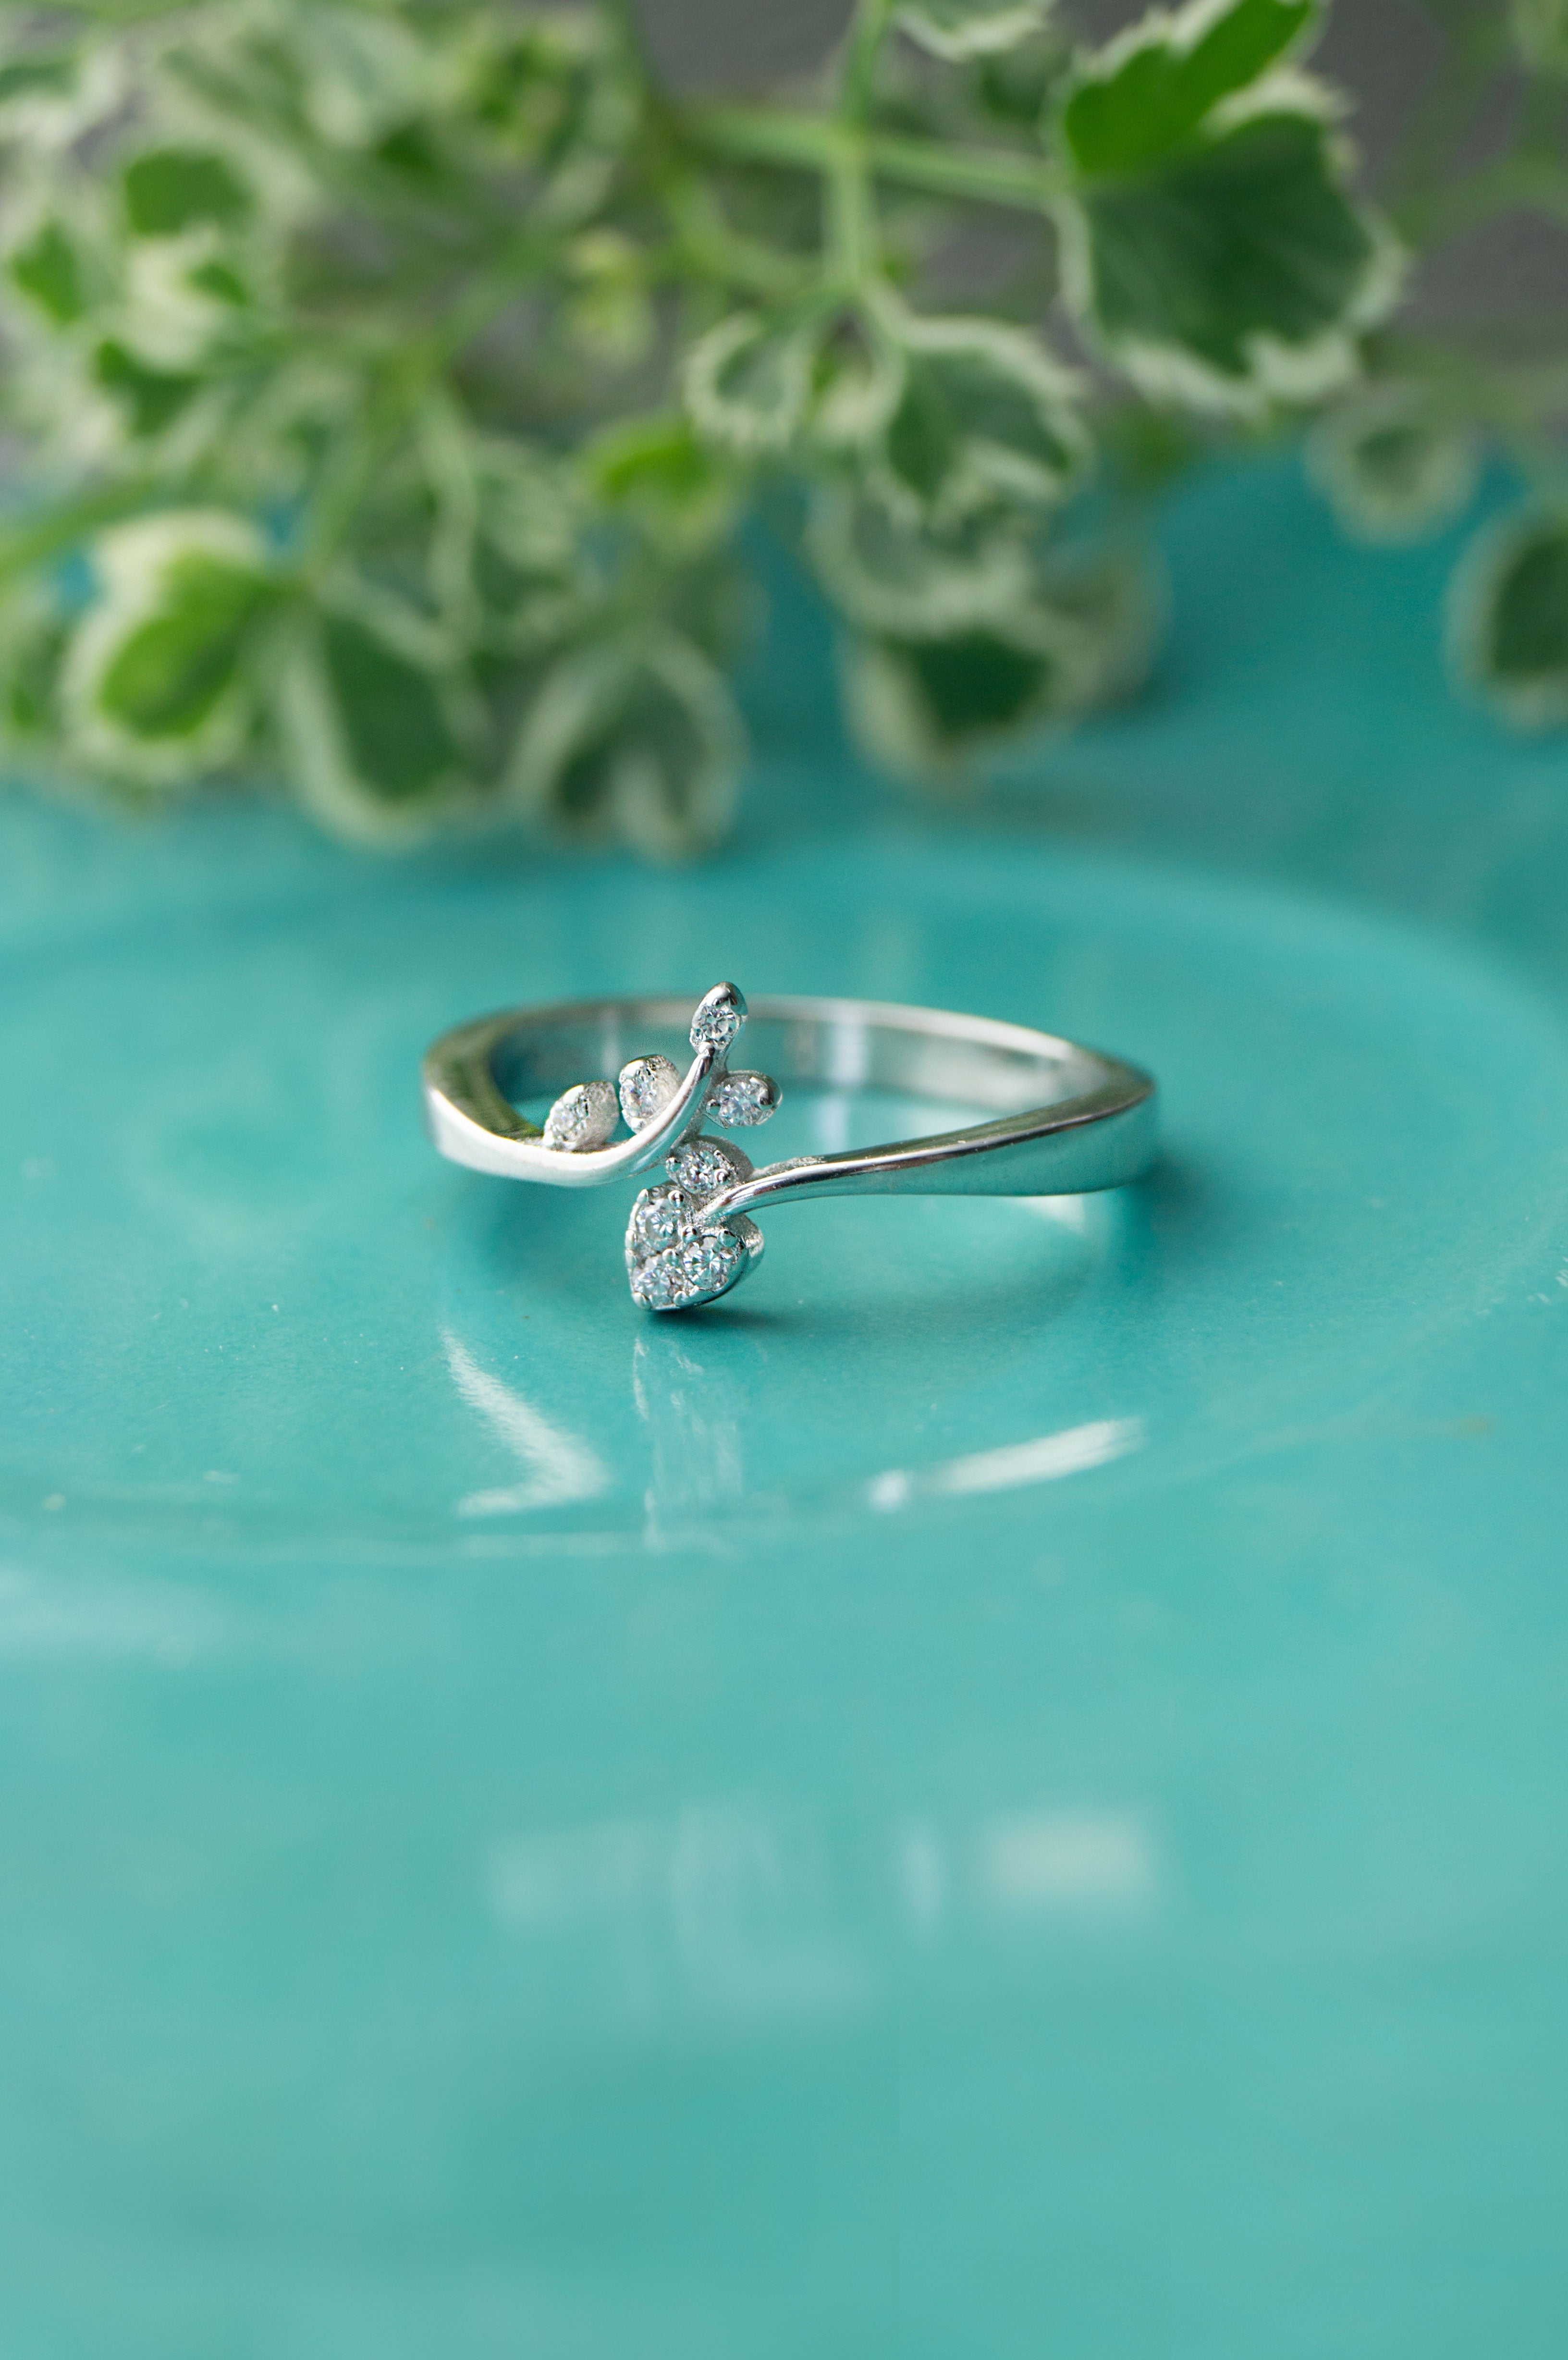 Elegant Silver Ring